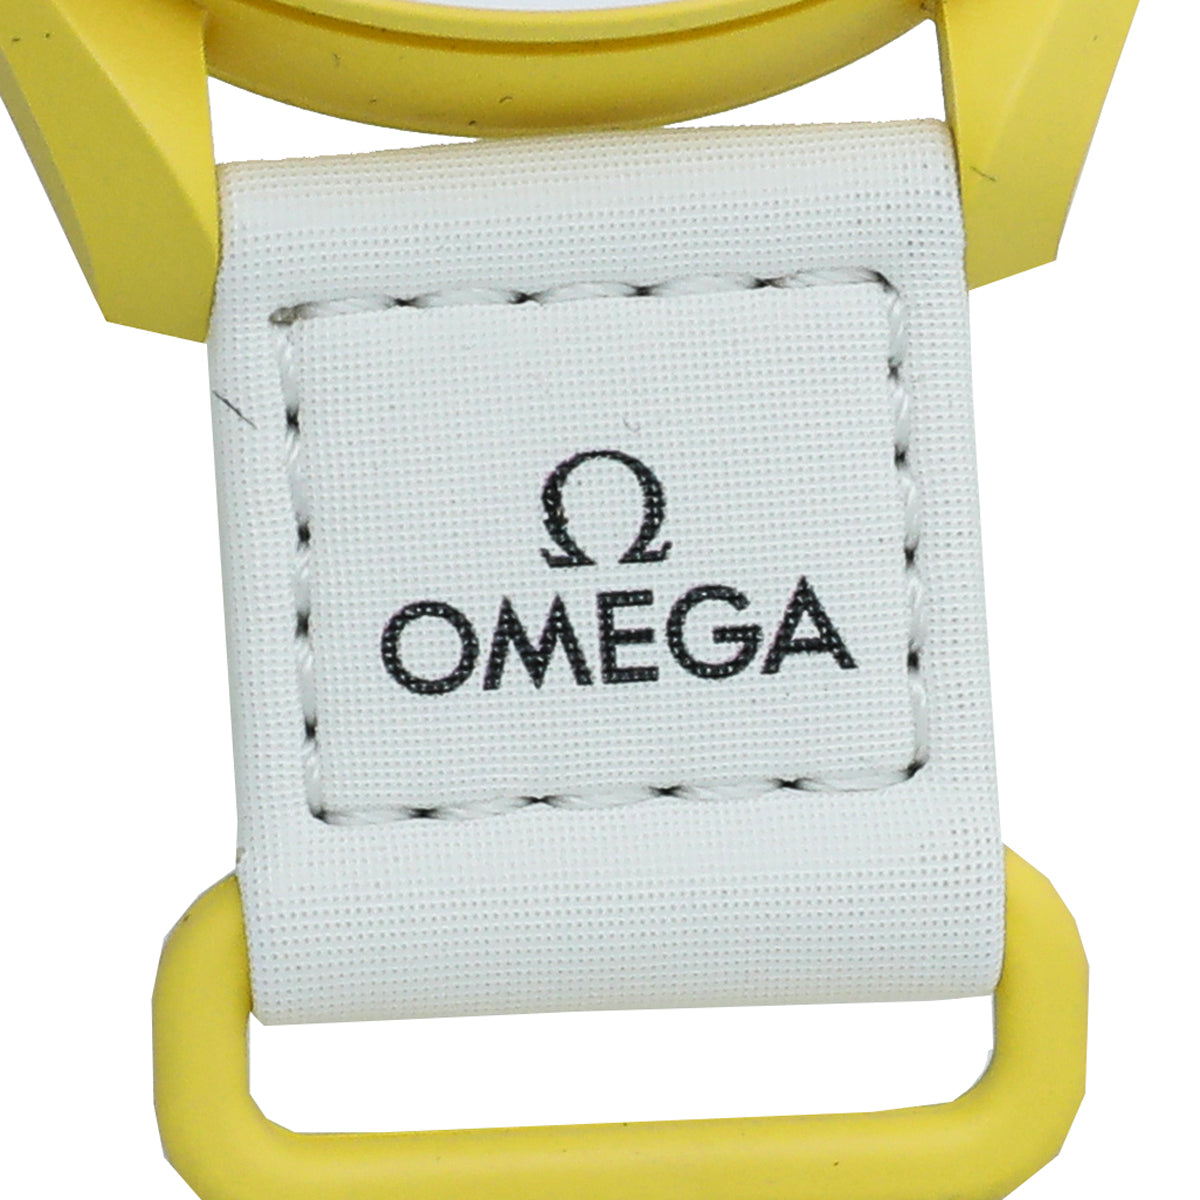 Omega Bicolor X Swatch Speedmaster Moonswatch Mission To The Sun Quartz 41mm Watch